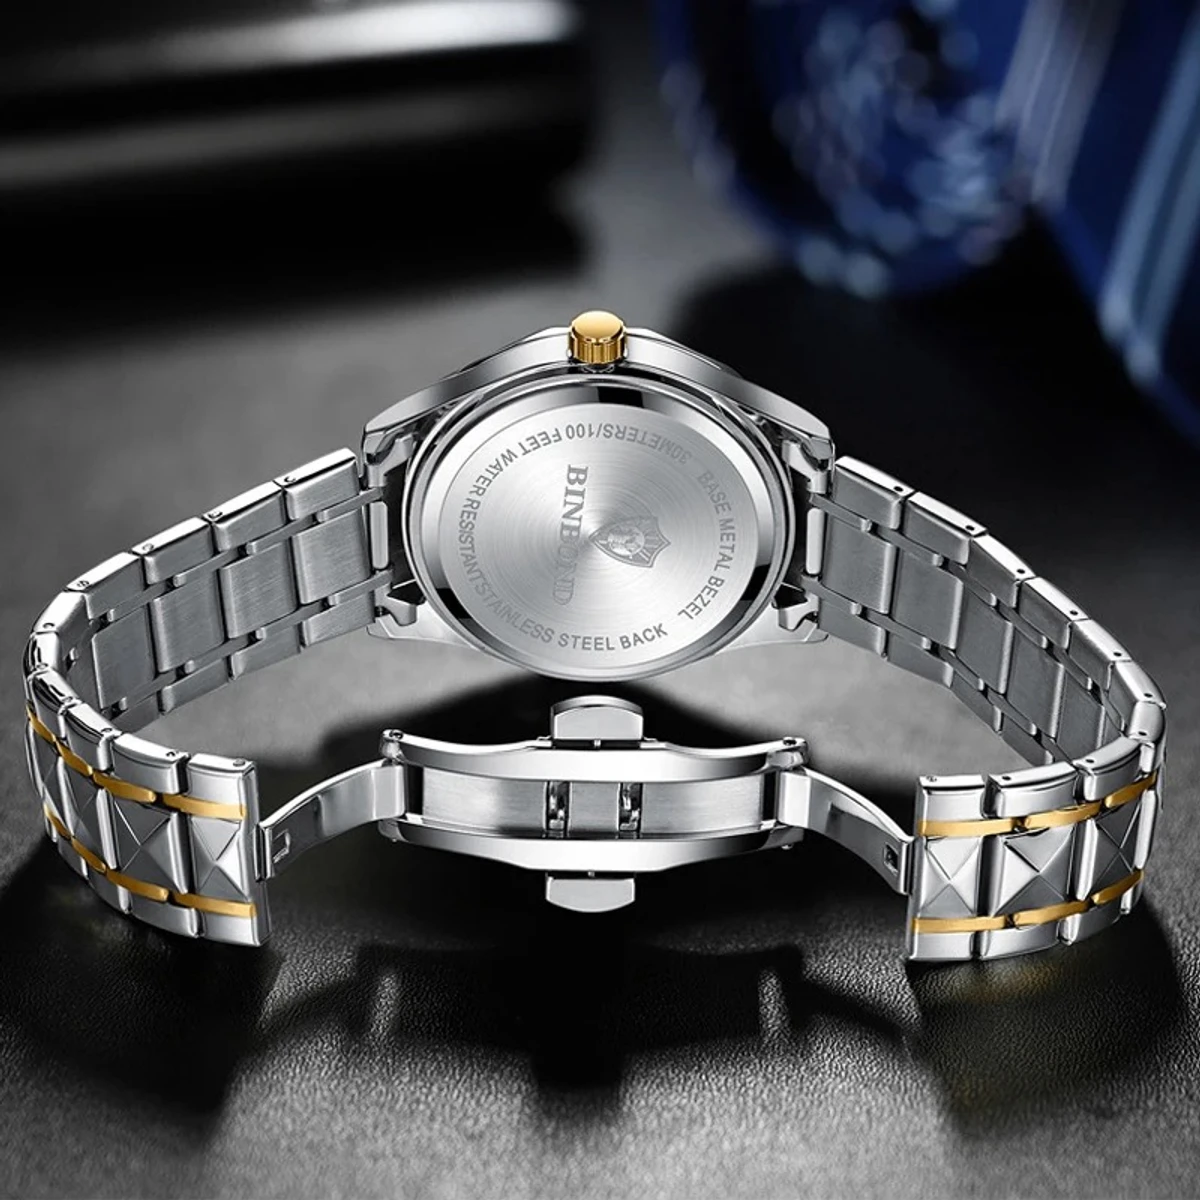 Luxury Binbond authentic men's watch waterproof night light dual calendar watch men's quartz watch diamond ceiling glass- Black & Golden